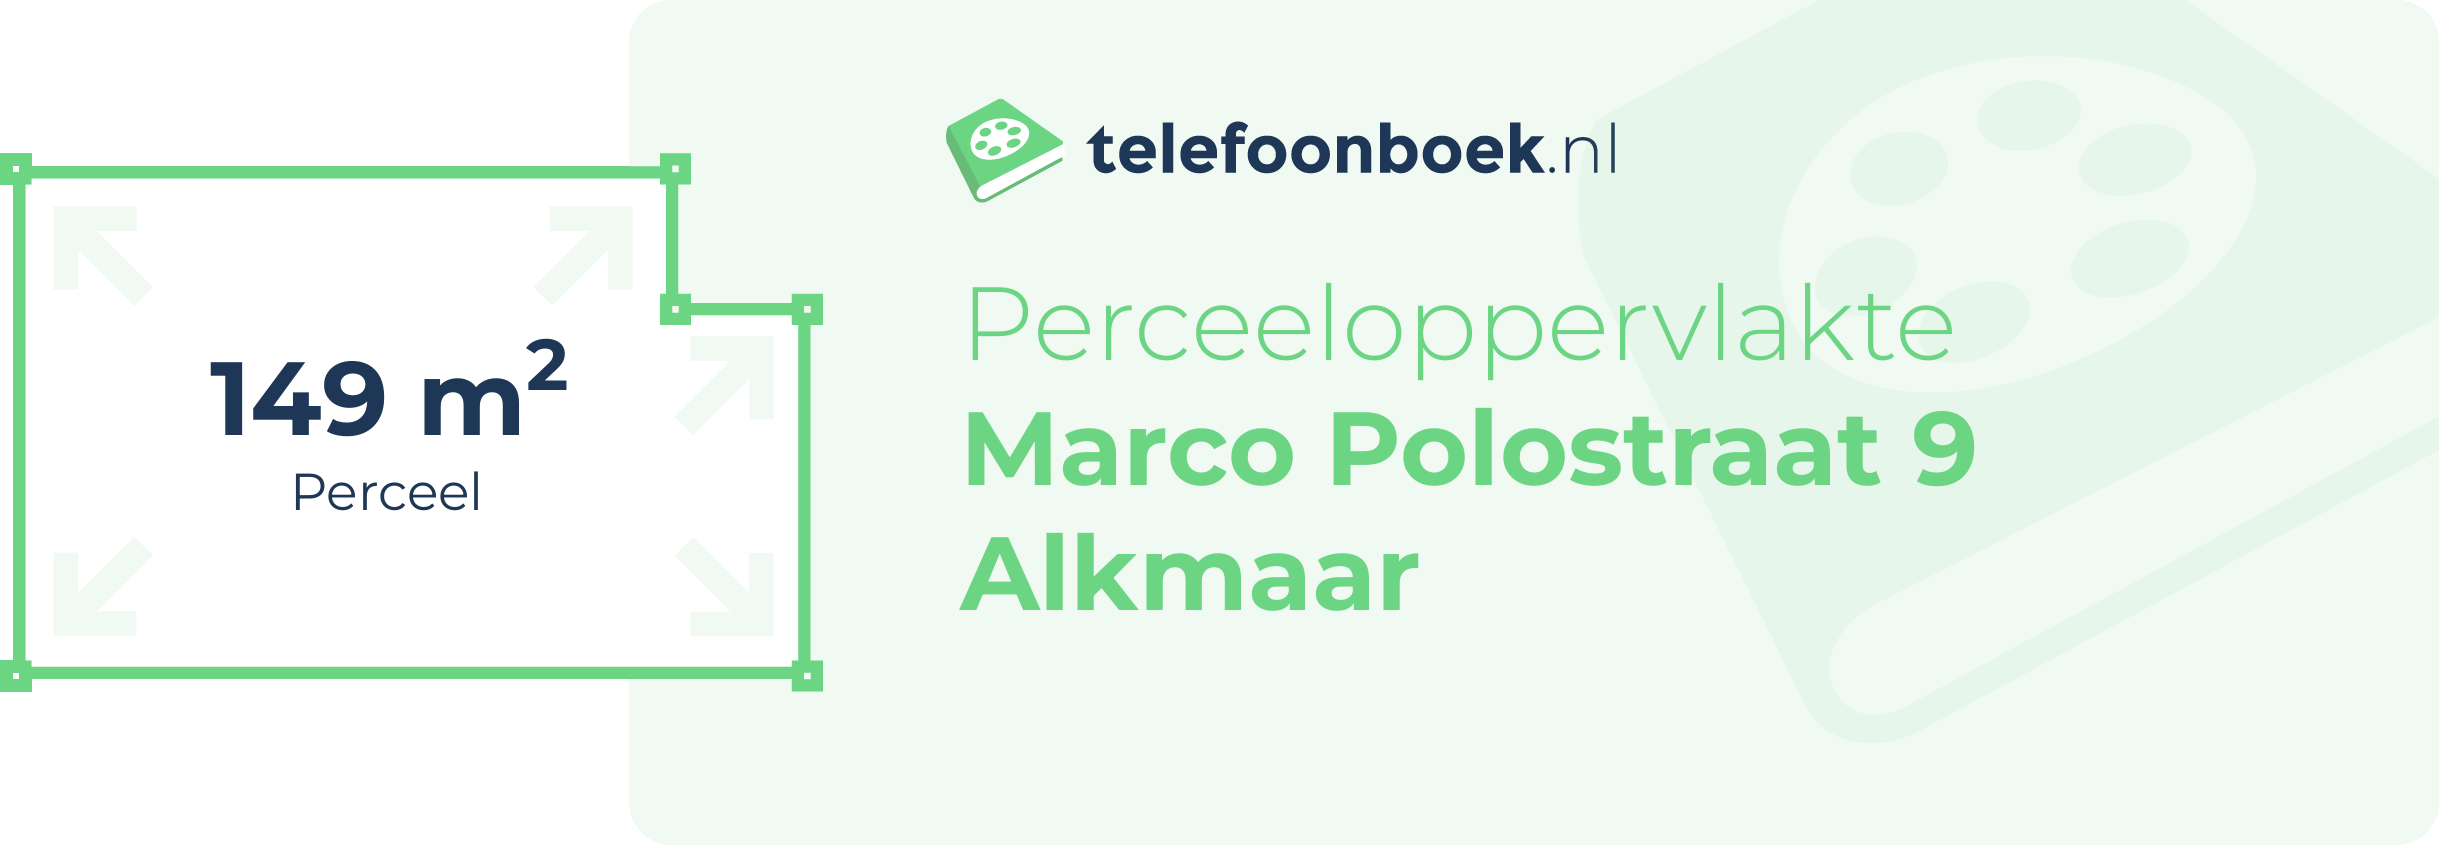 Perceeloppervlakte Marco Polostraat 9 Alkmaar